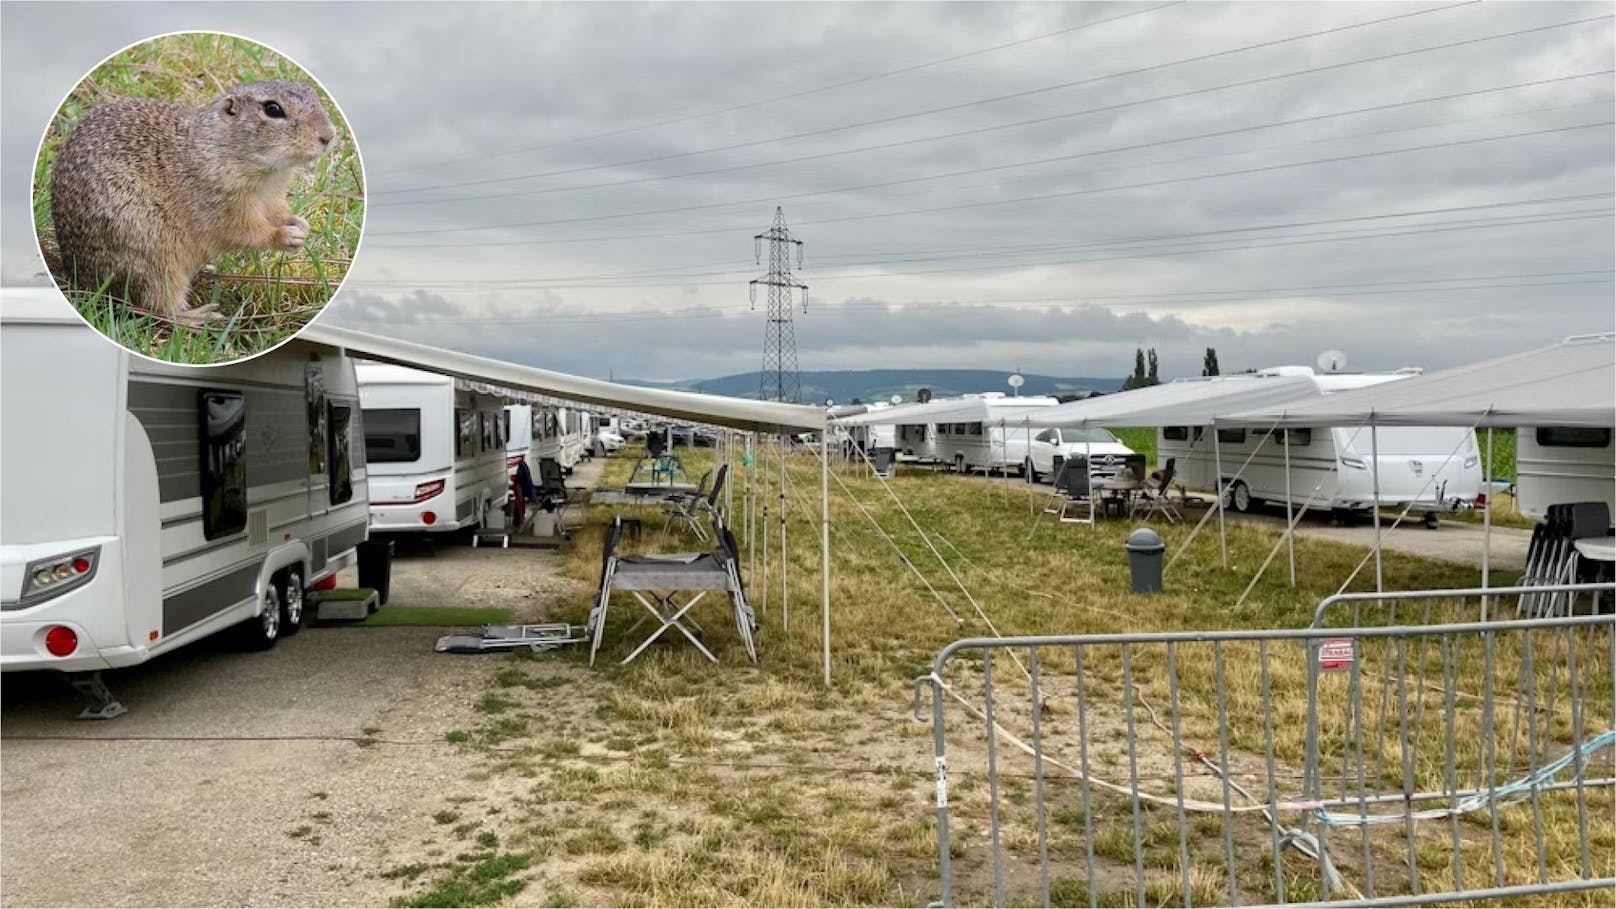 Nach Roma-Lager auf Zieselwiese: Campingverbot ist fix